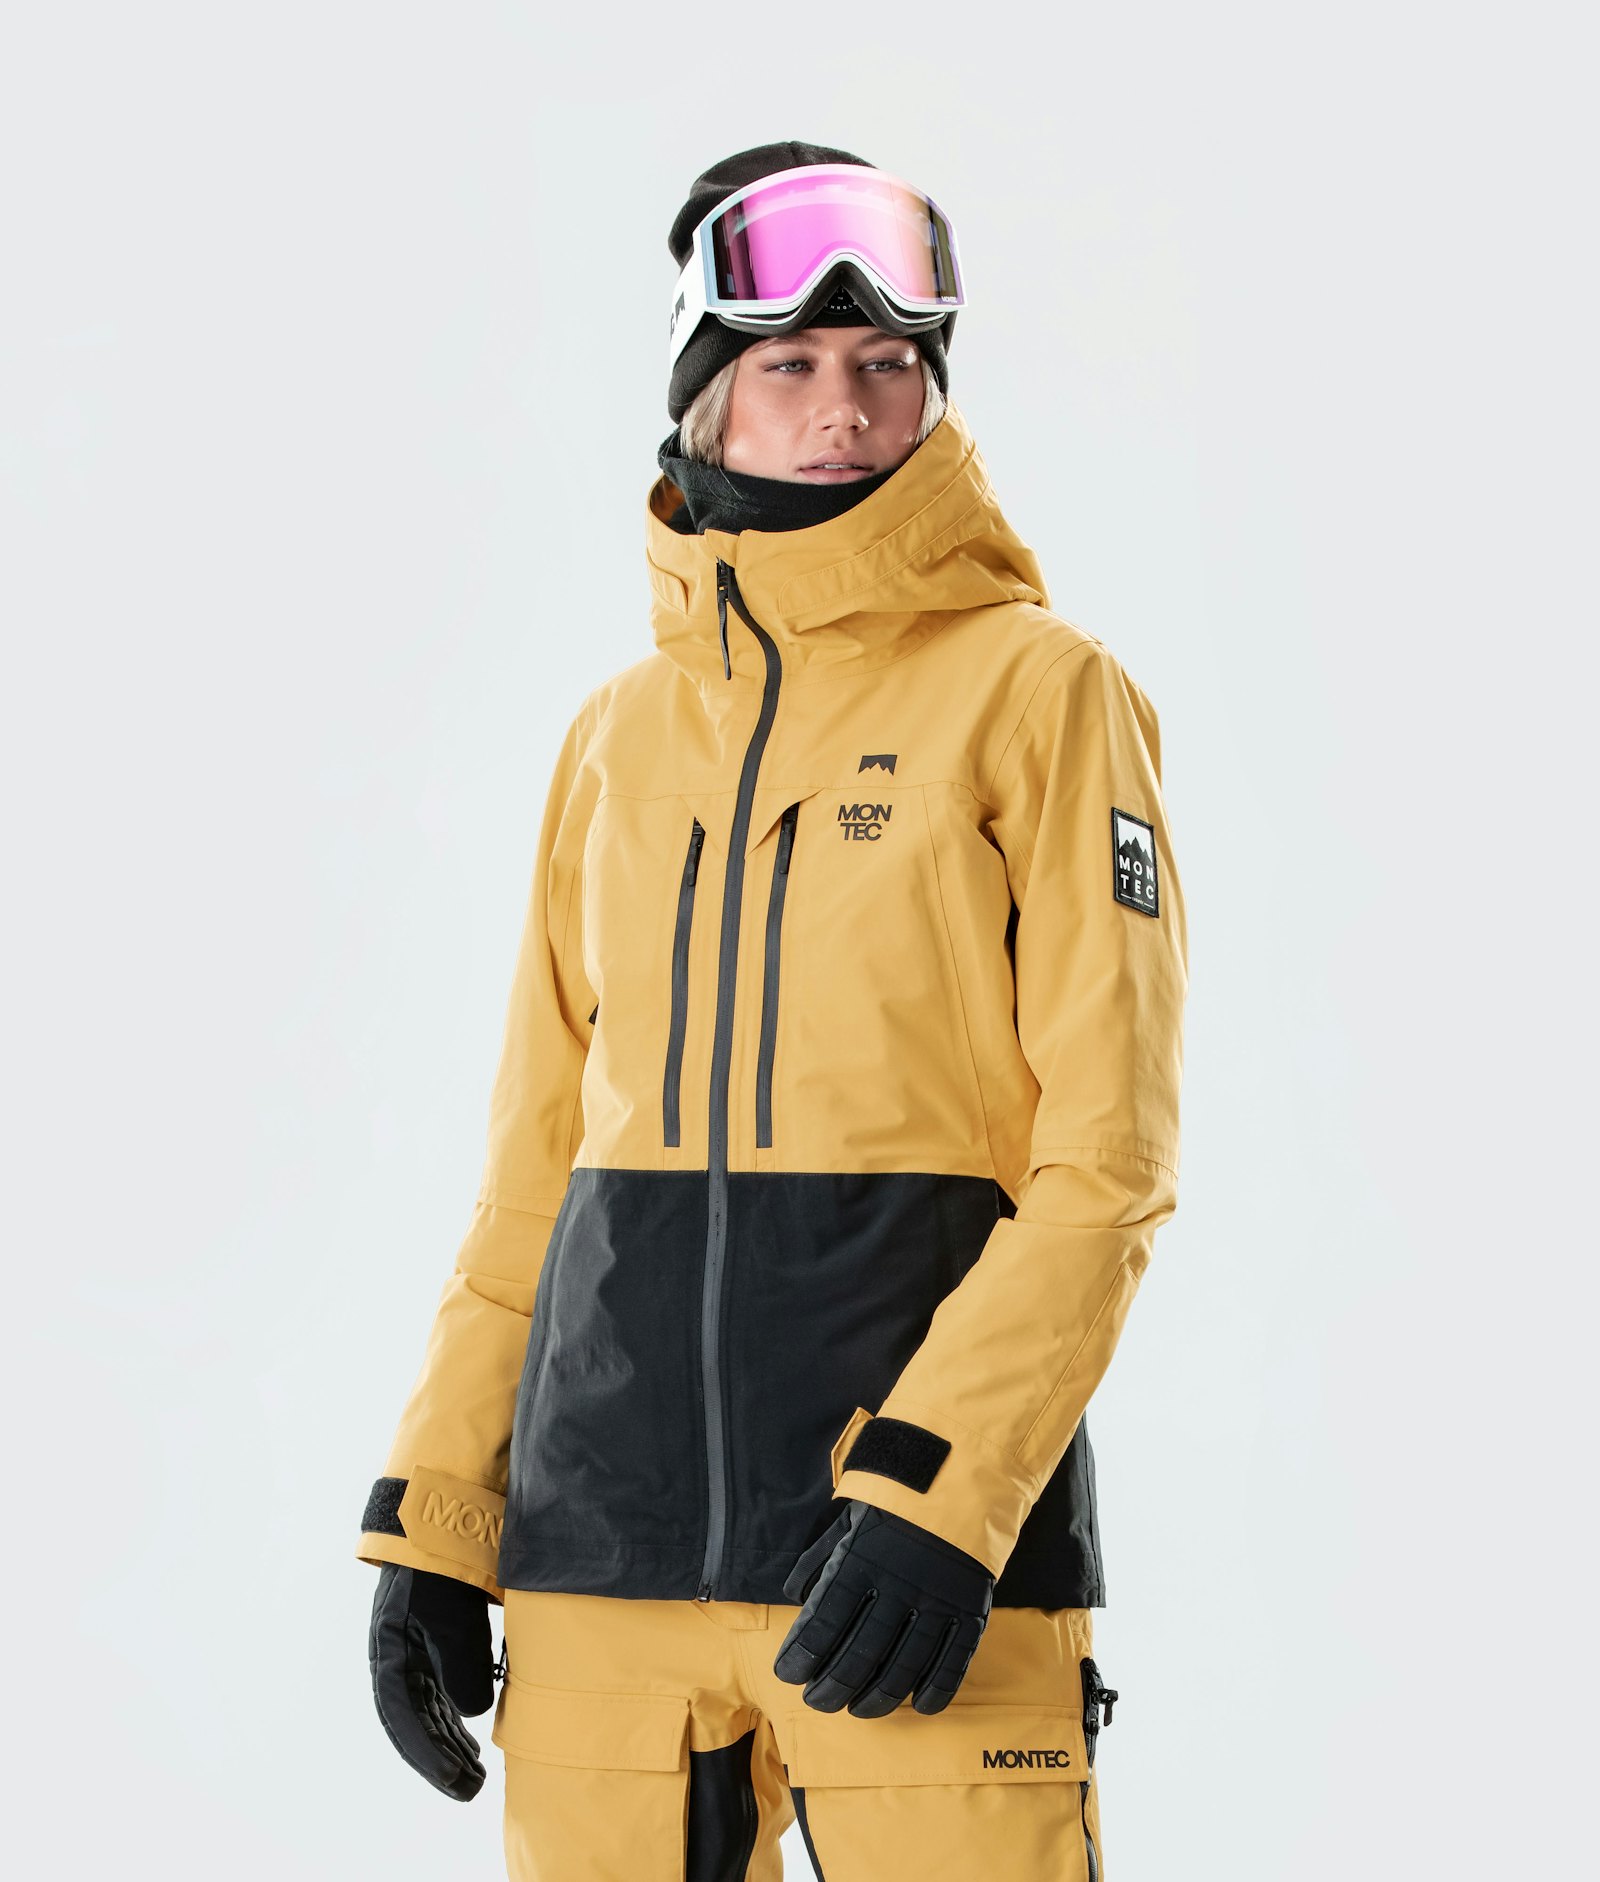 Moss W 2020 Snowboard Jacket Women Yellow/Black Renewed, Image 1 of 9